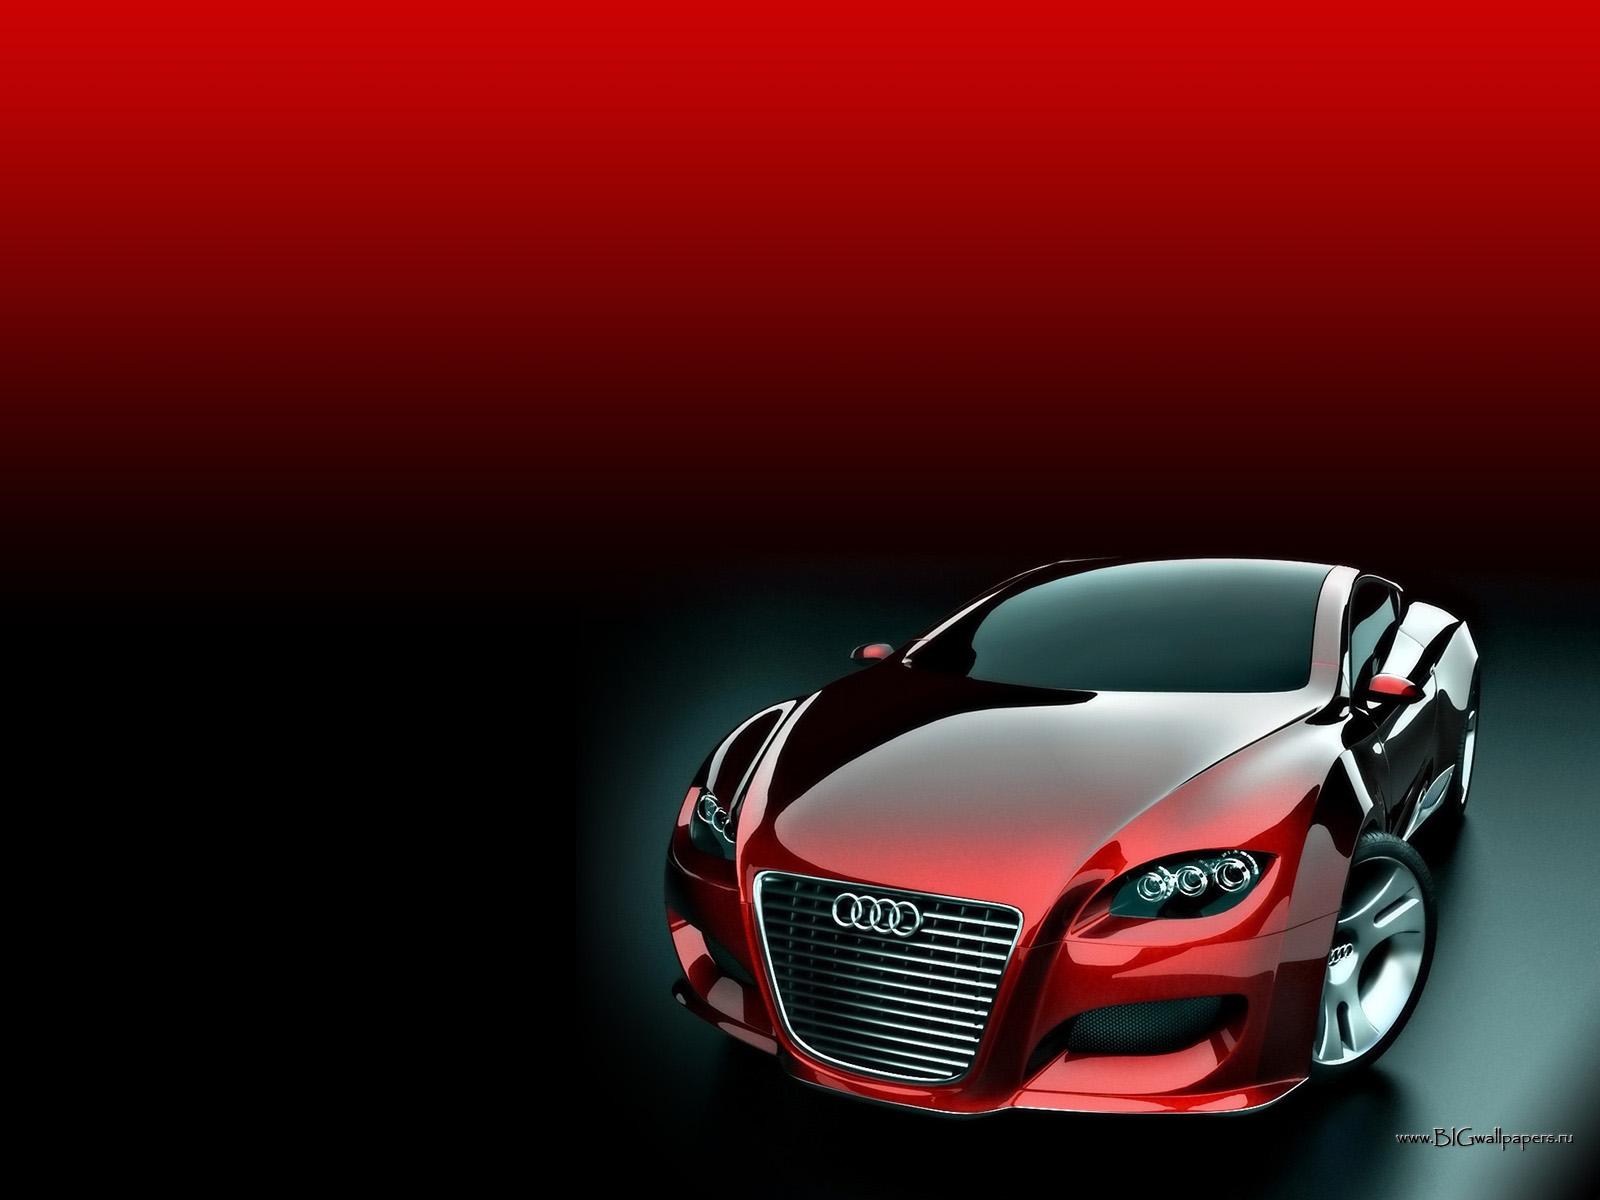 Audi Locus concept car free desktop background wallpaper image